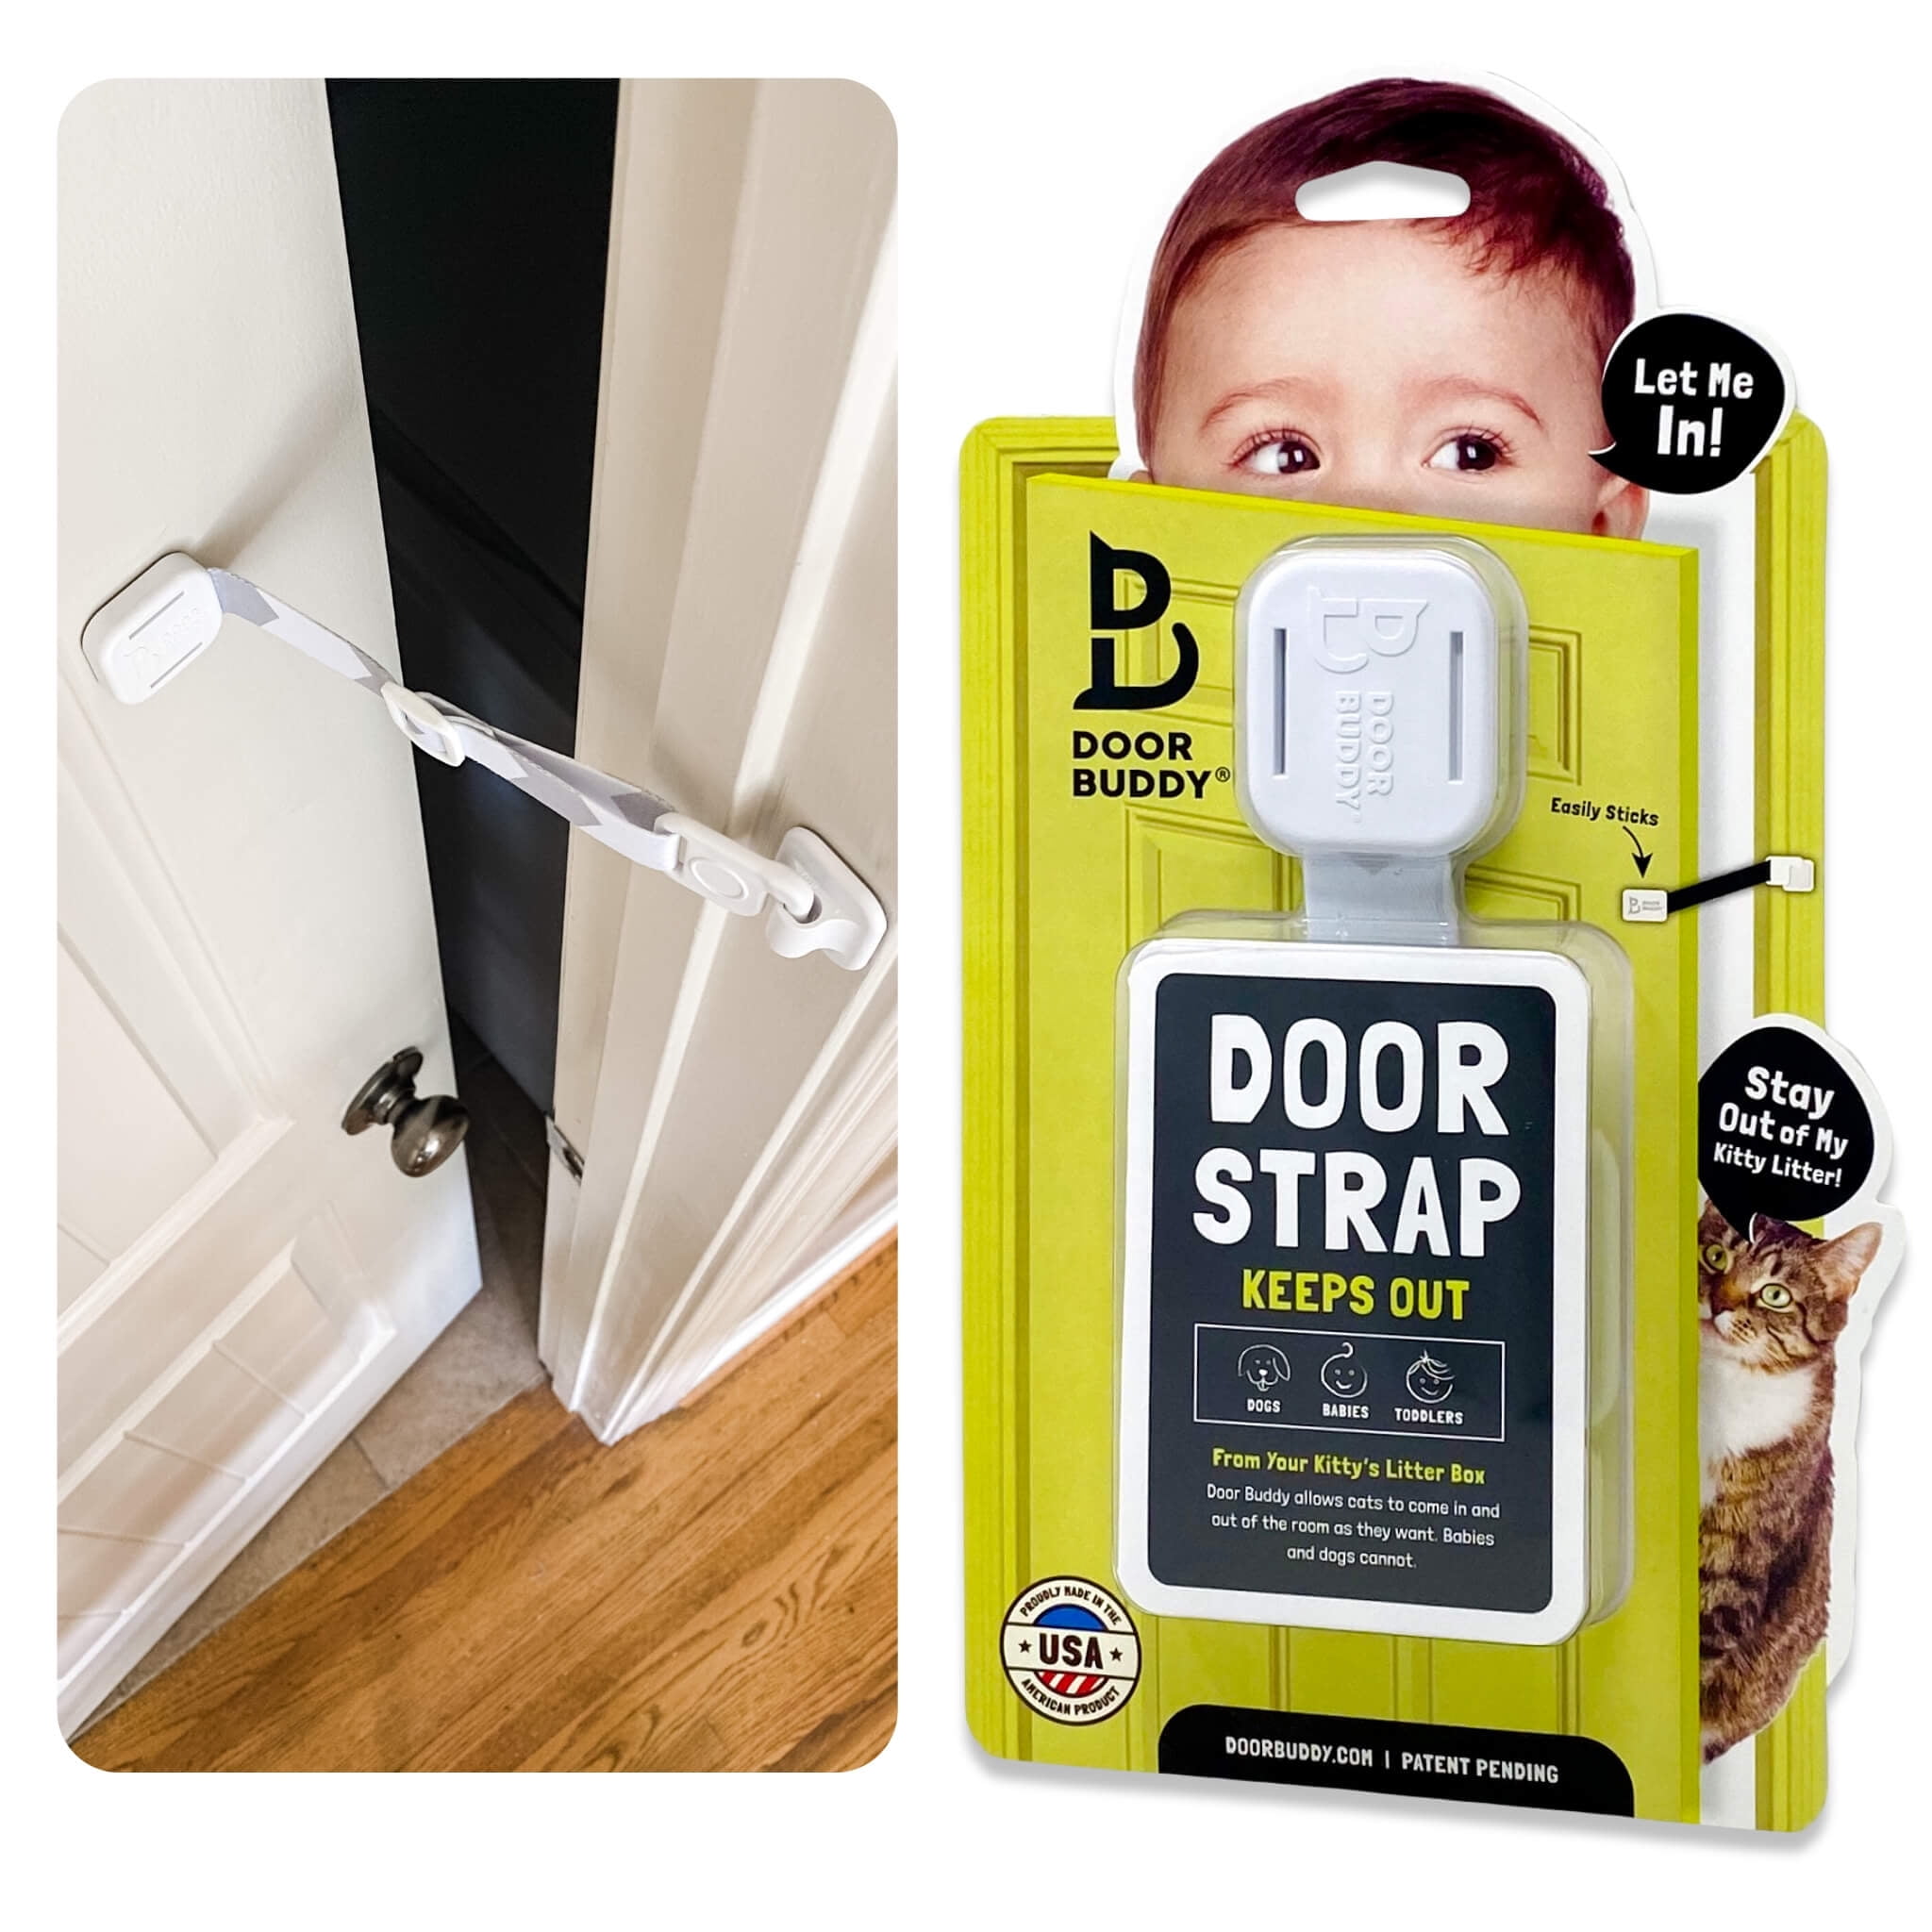 Mommy's Helper Bi-Fold & Closet Door Slide-Lok Child Safety Lock 70302 